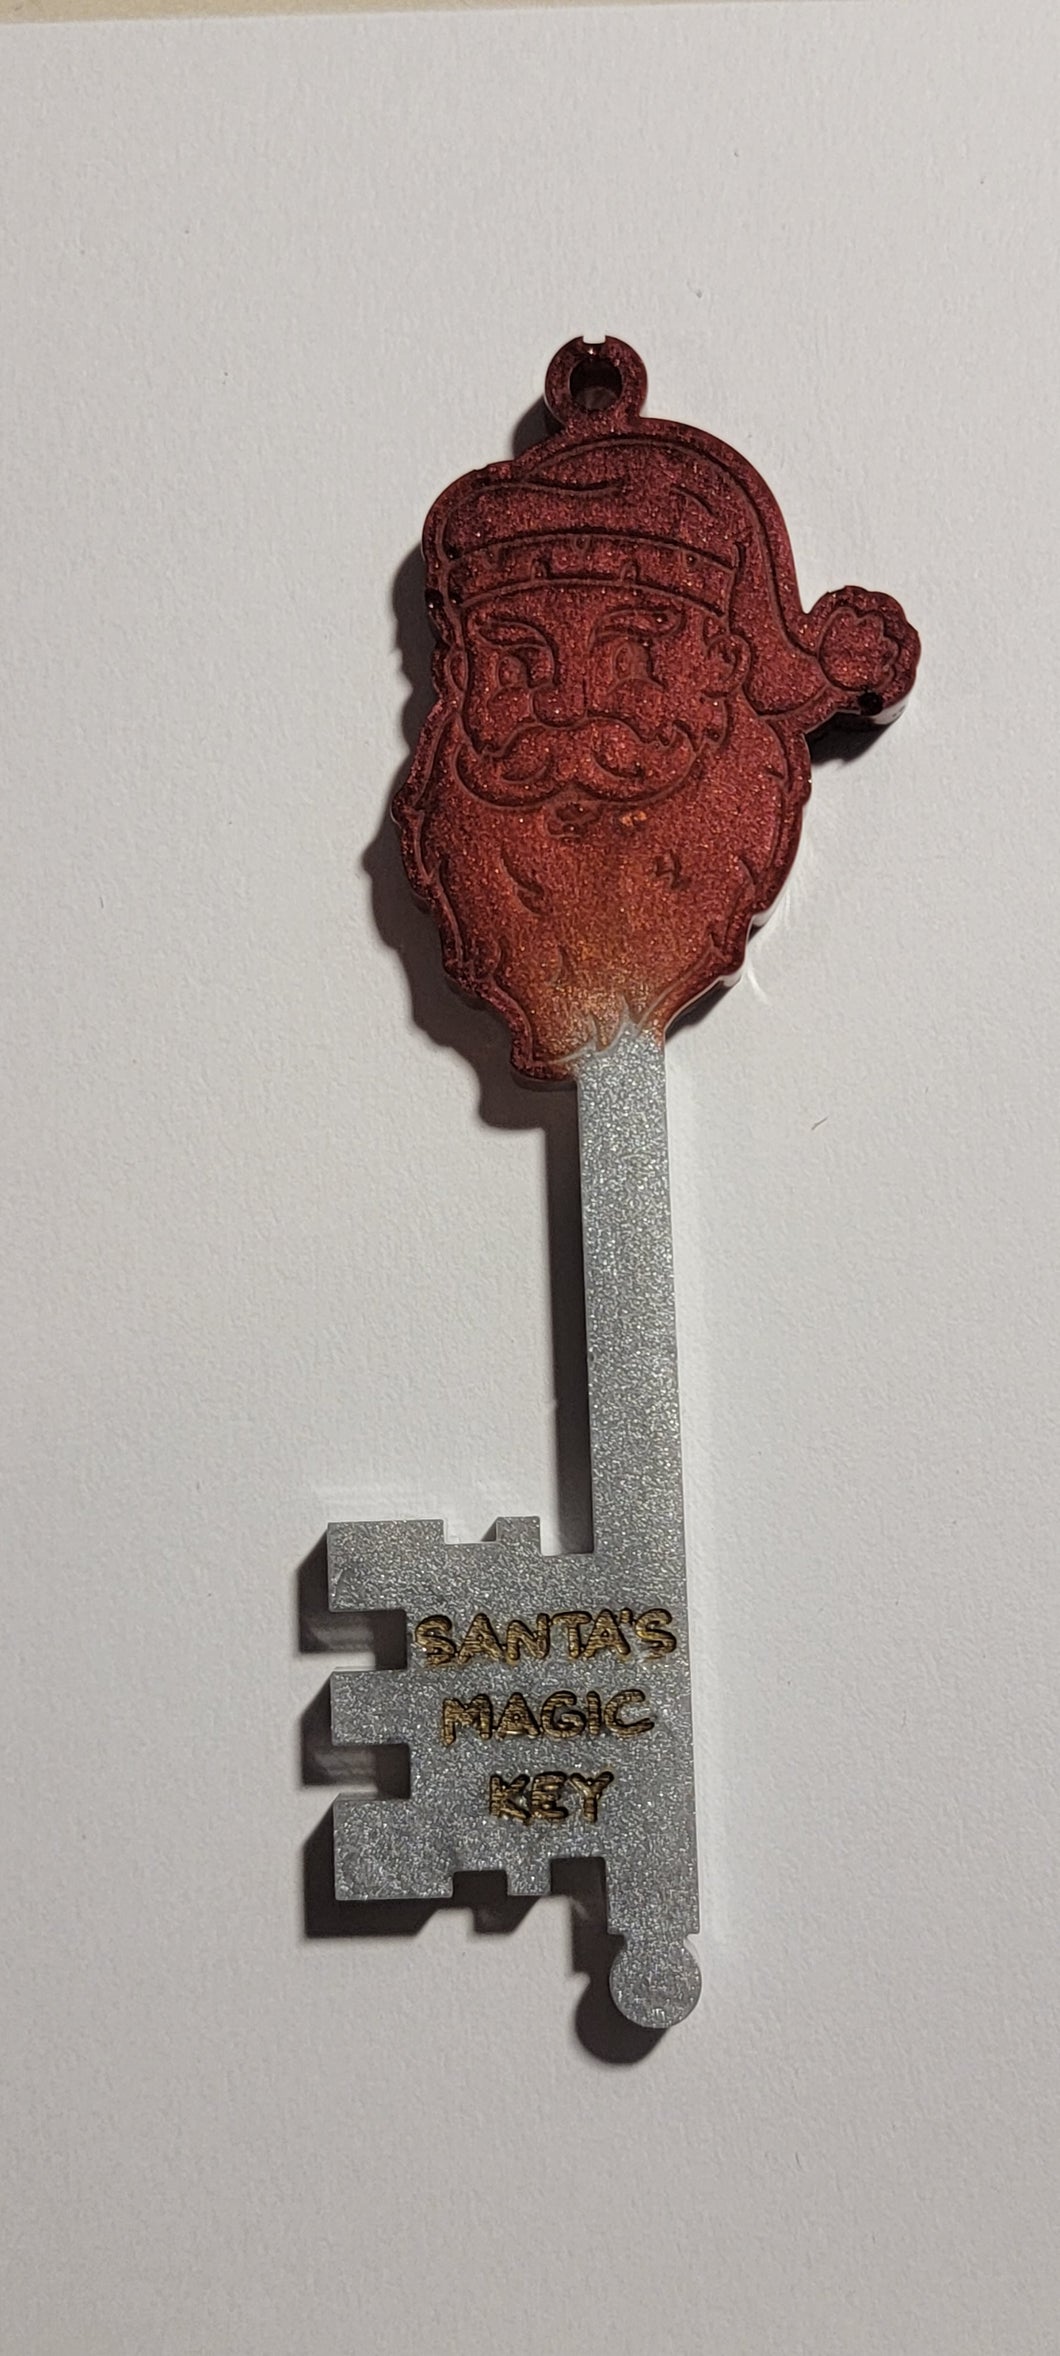 Santa's Magic Keys PLEASE READ DESCRIPTION FOR DIRECTIONS